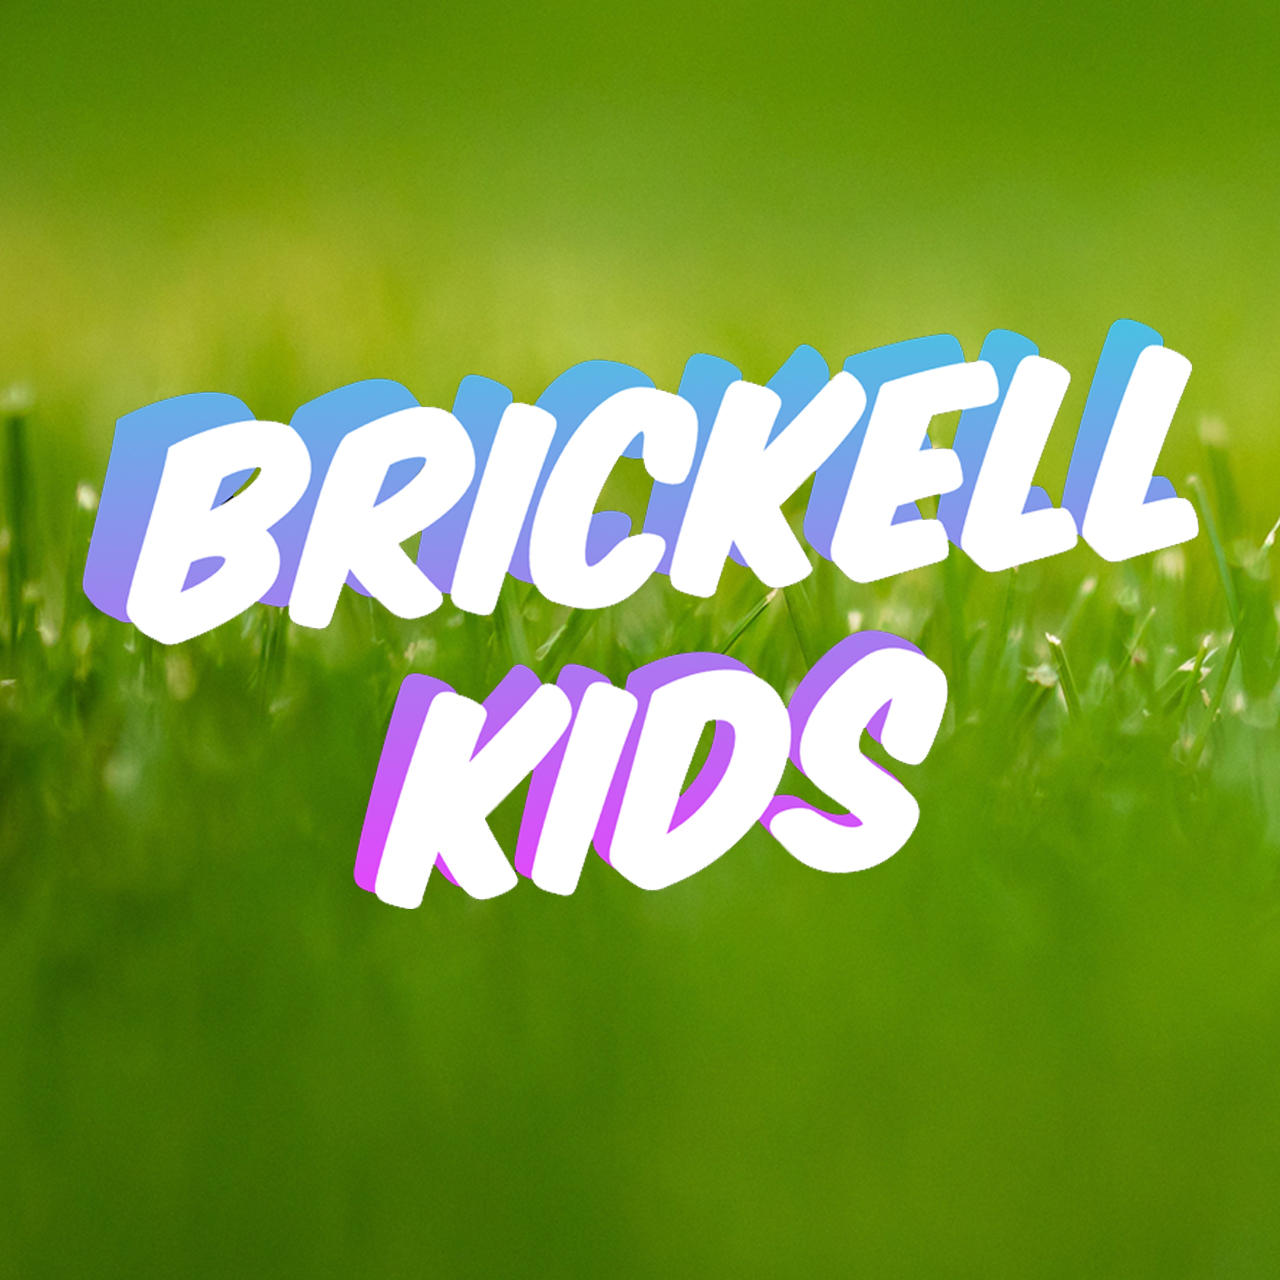 Brickell Kids